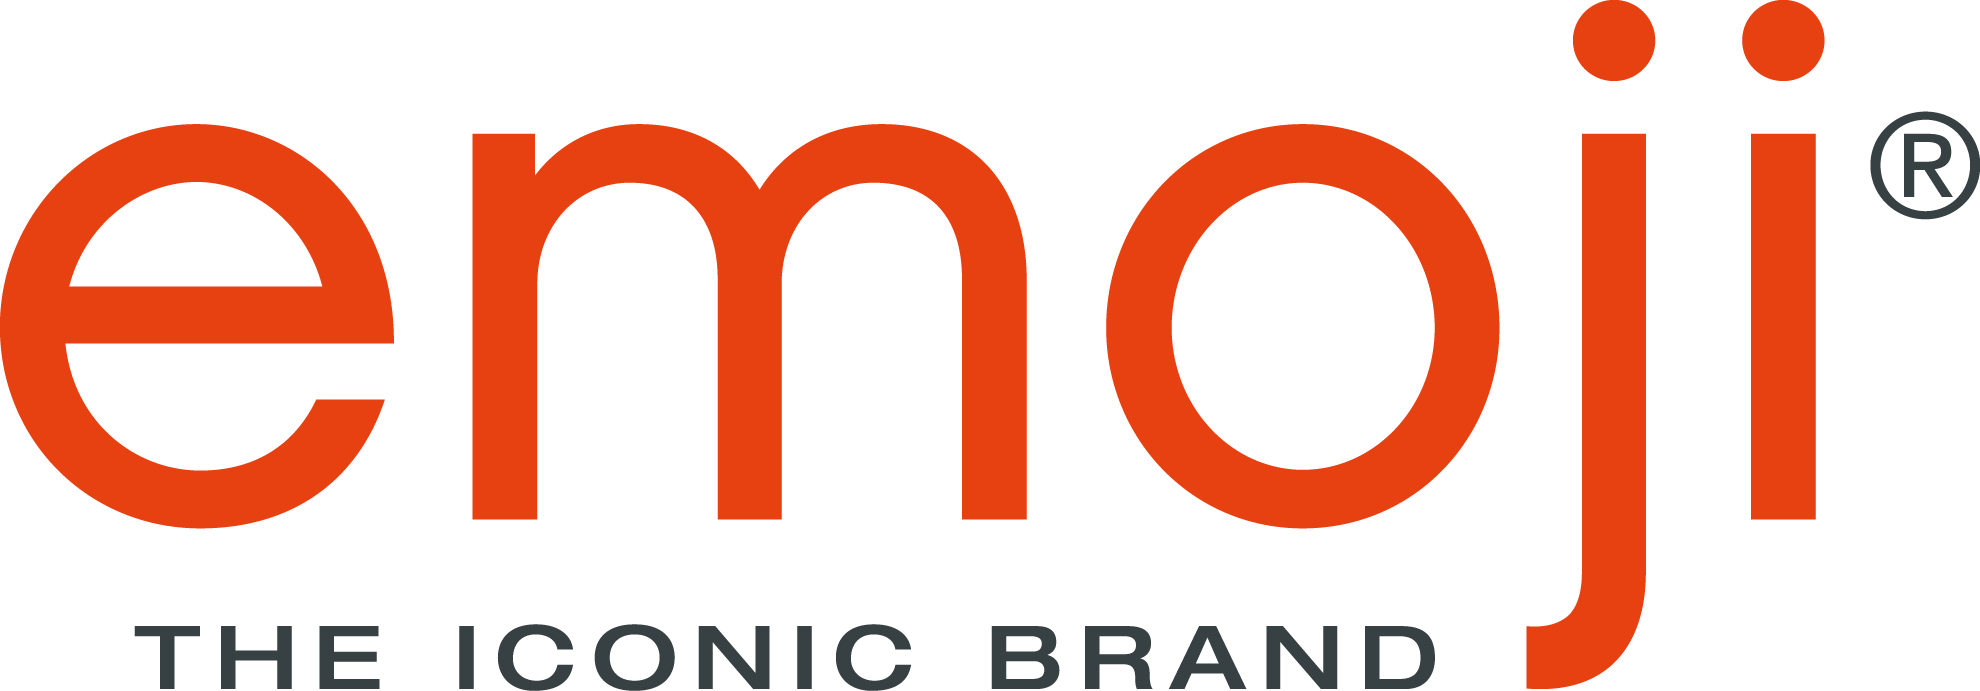 Emoji Logo - Emoji - Bulls Licensing - Connecting Brands